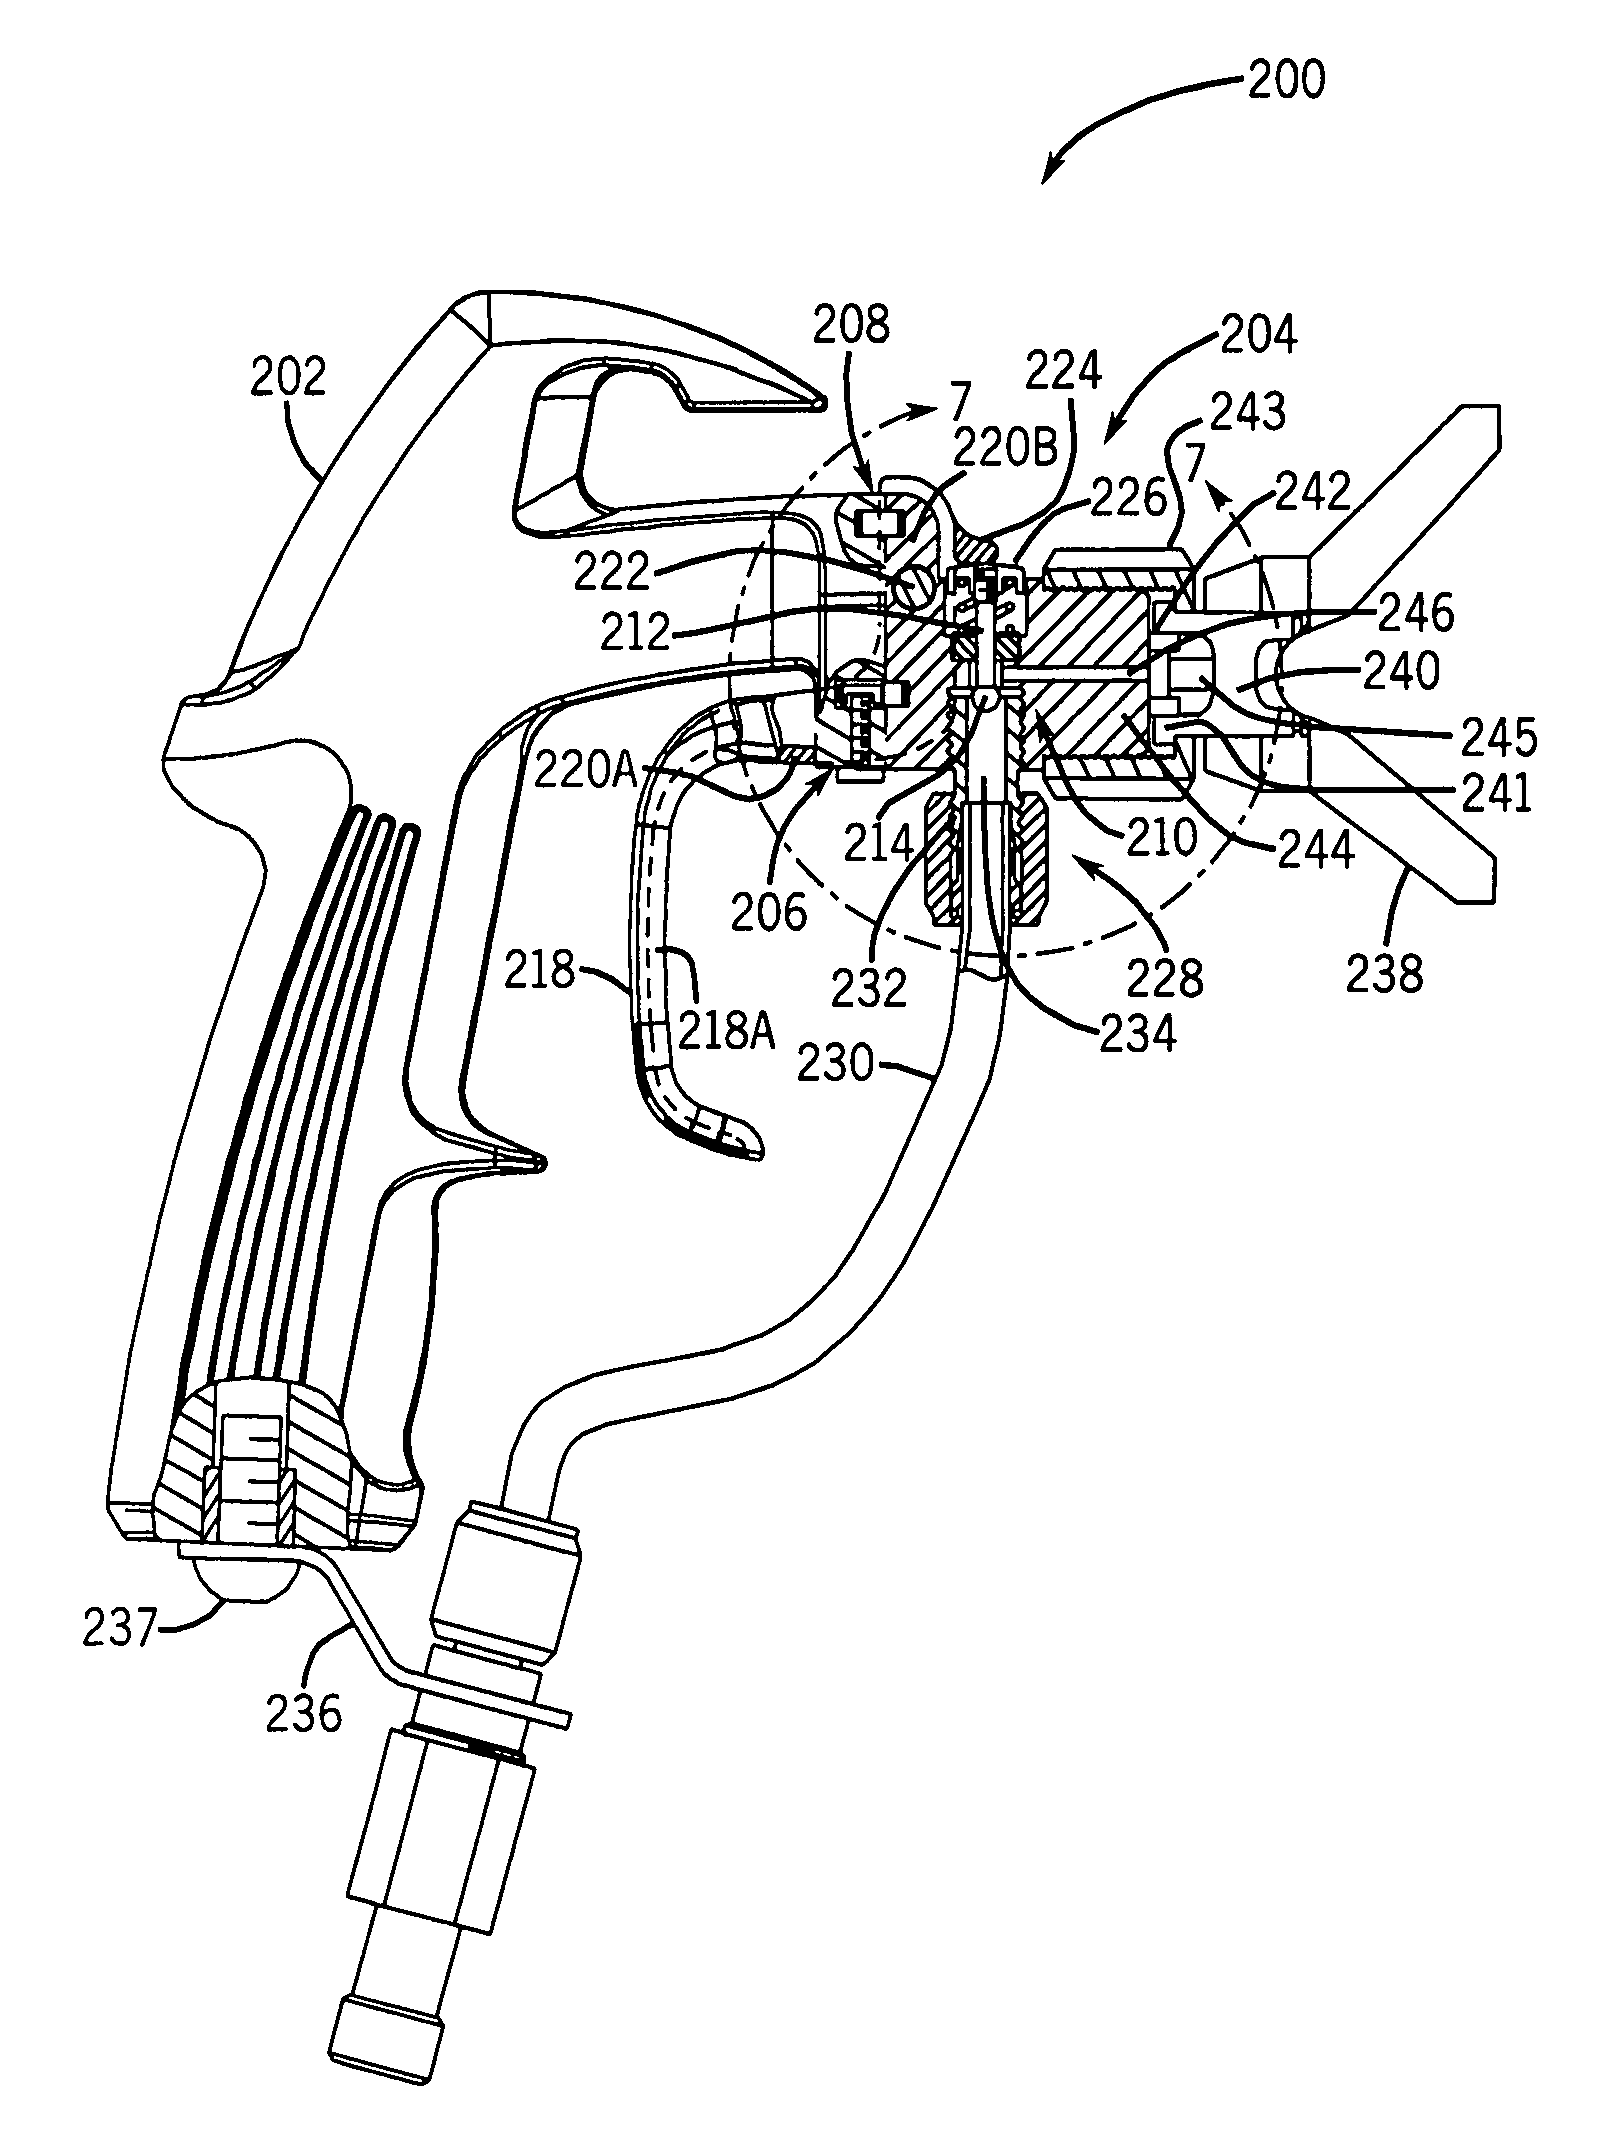 Airless spray gun having overhead valve and removable head